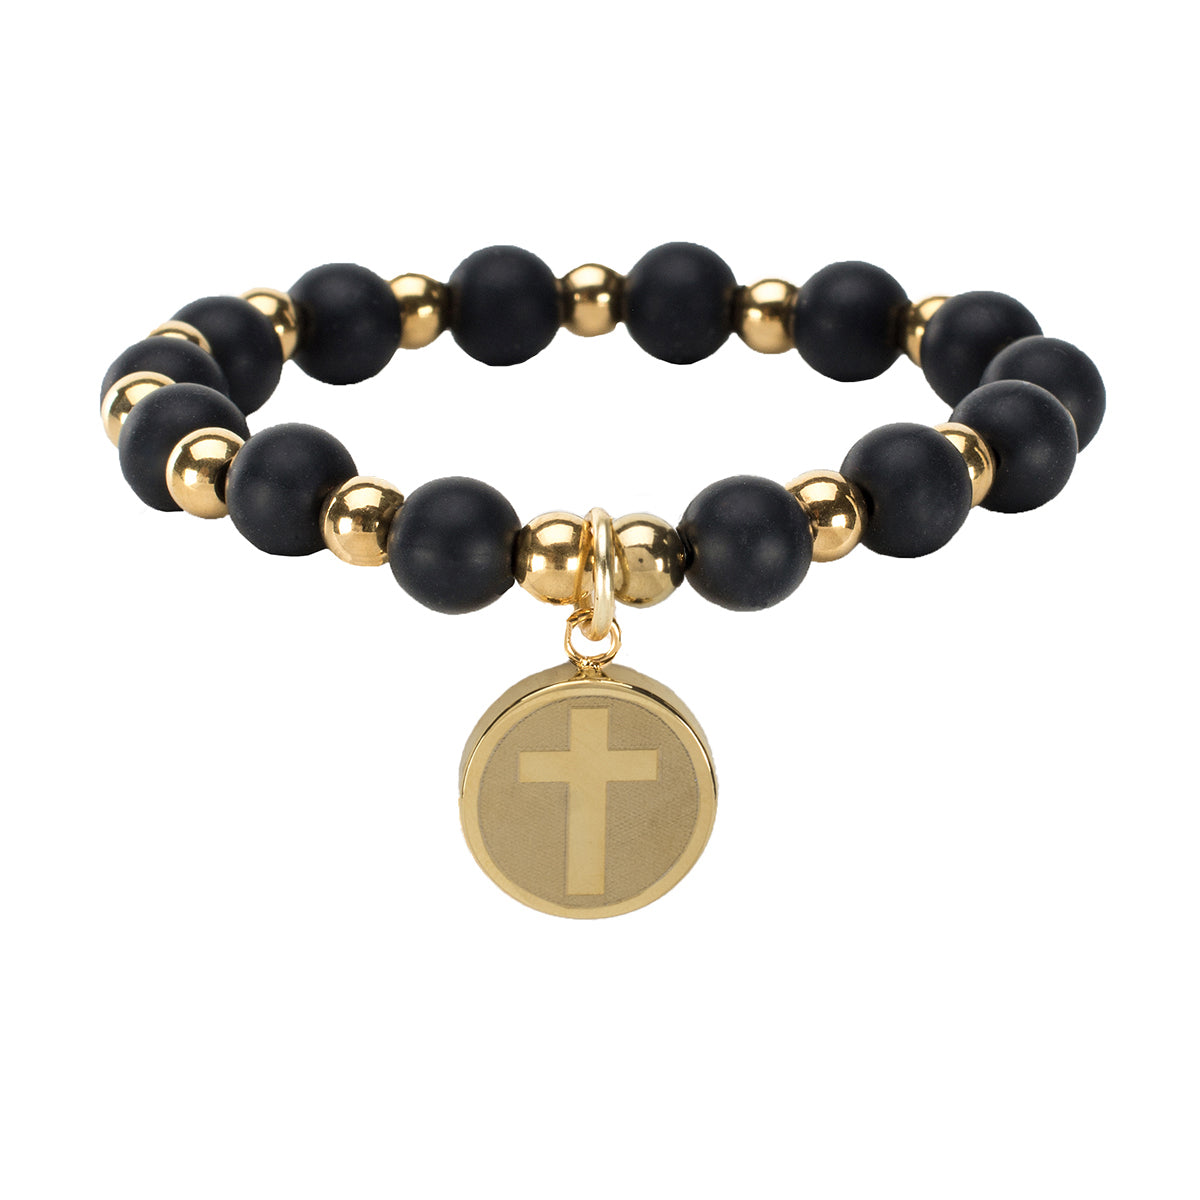 Erin Cross Bracelet in Black with gold